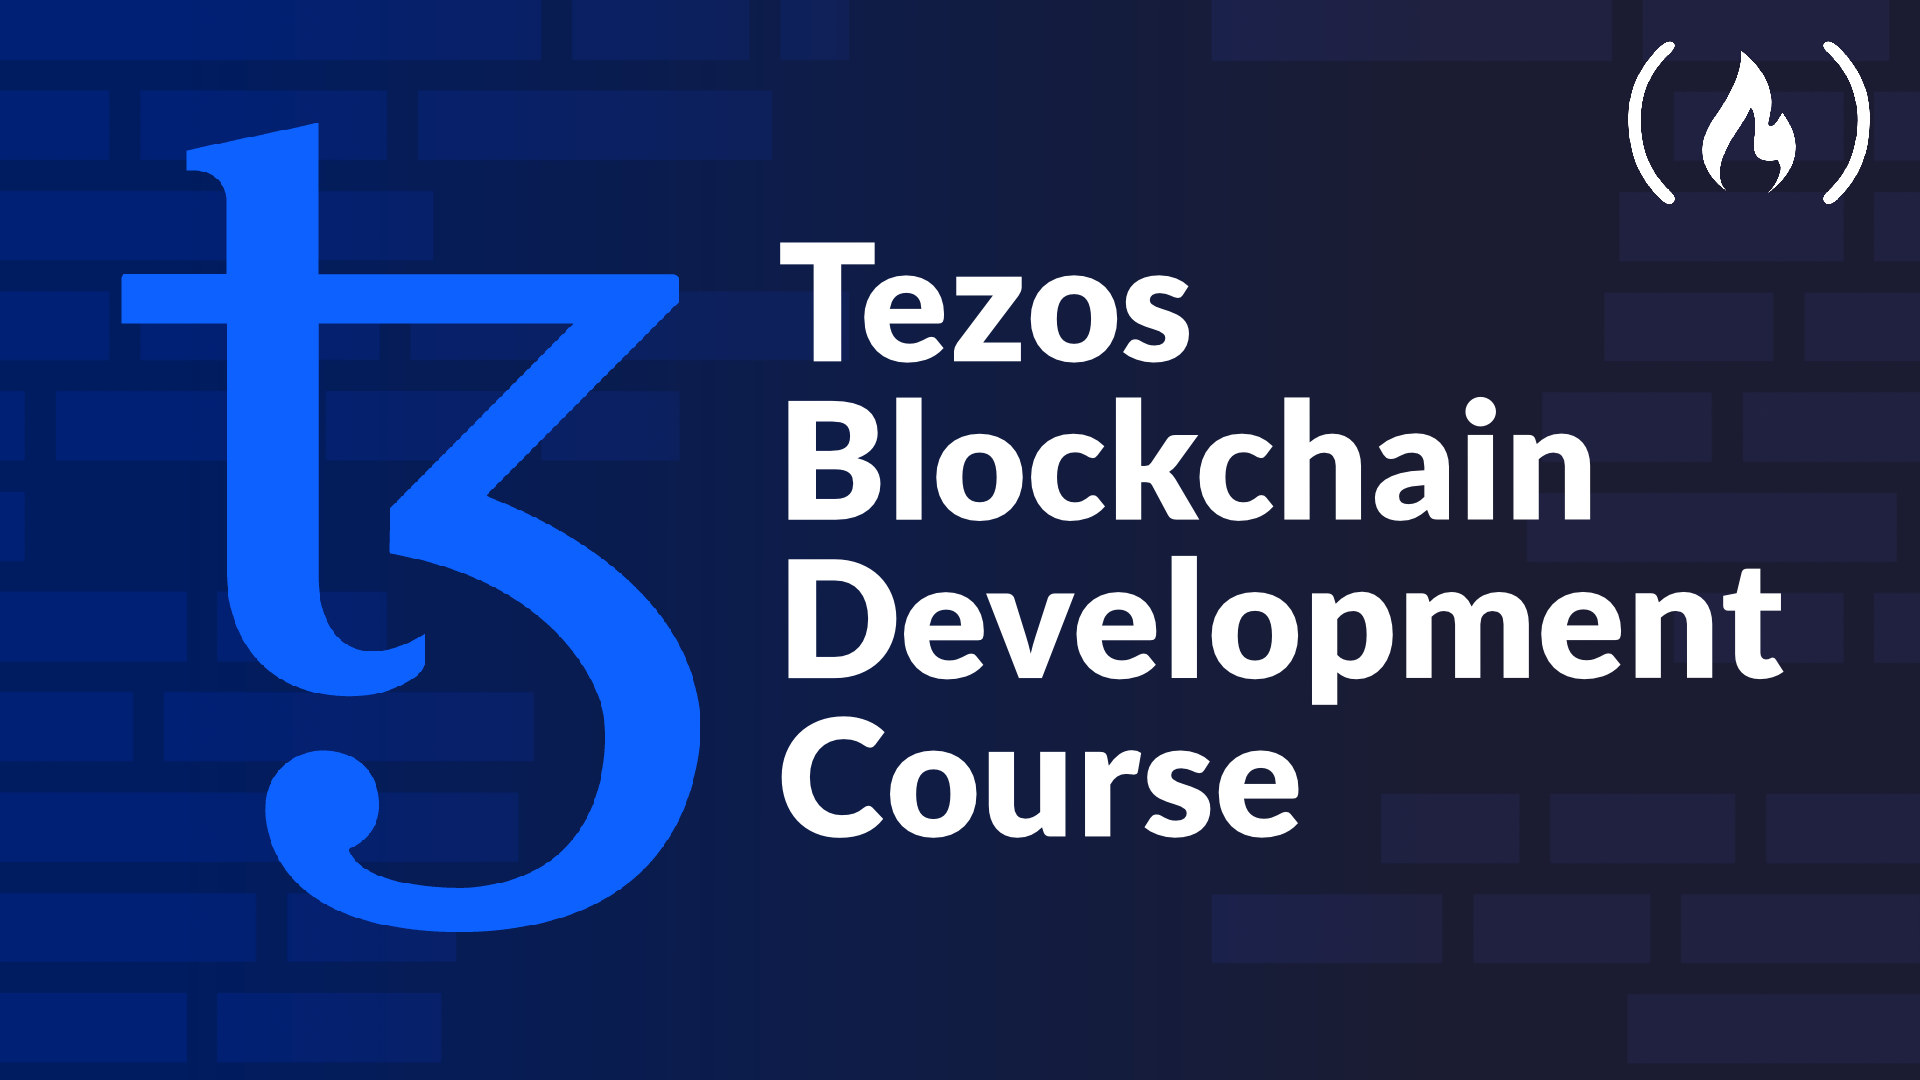 Tezos Blockchain Development Course